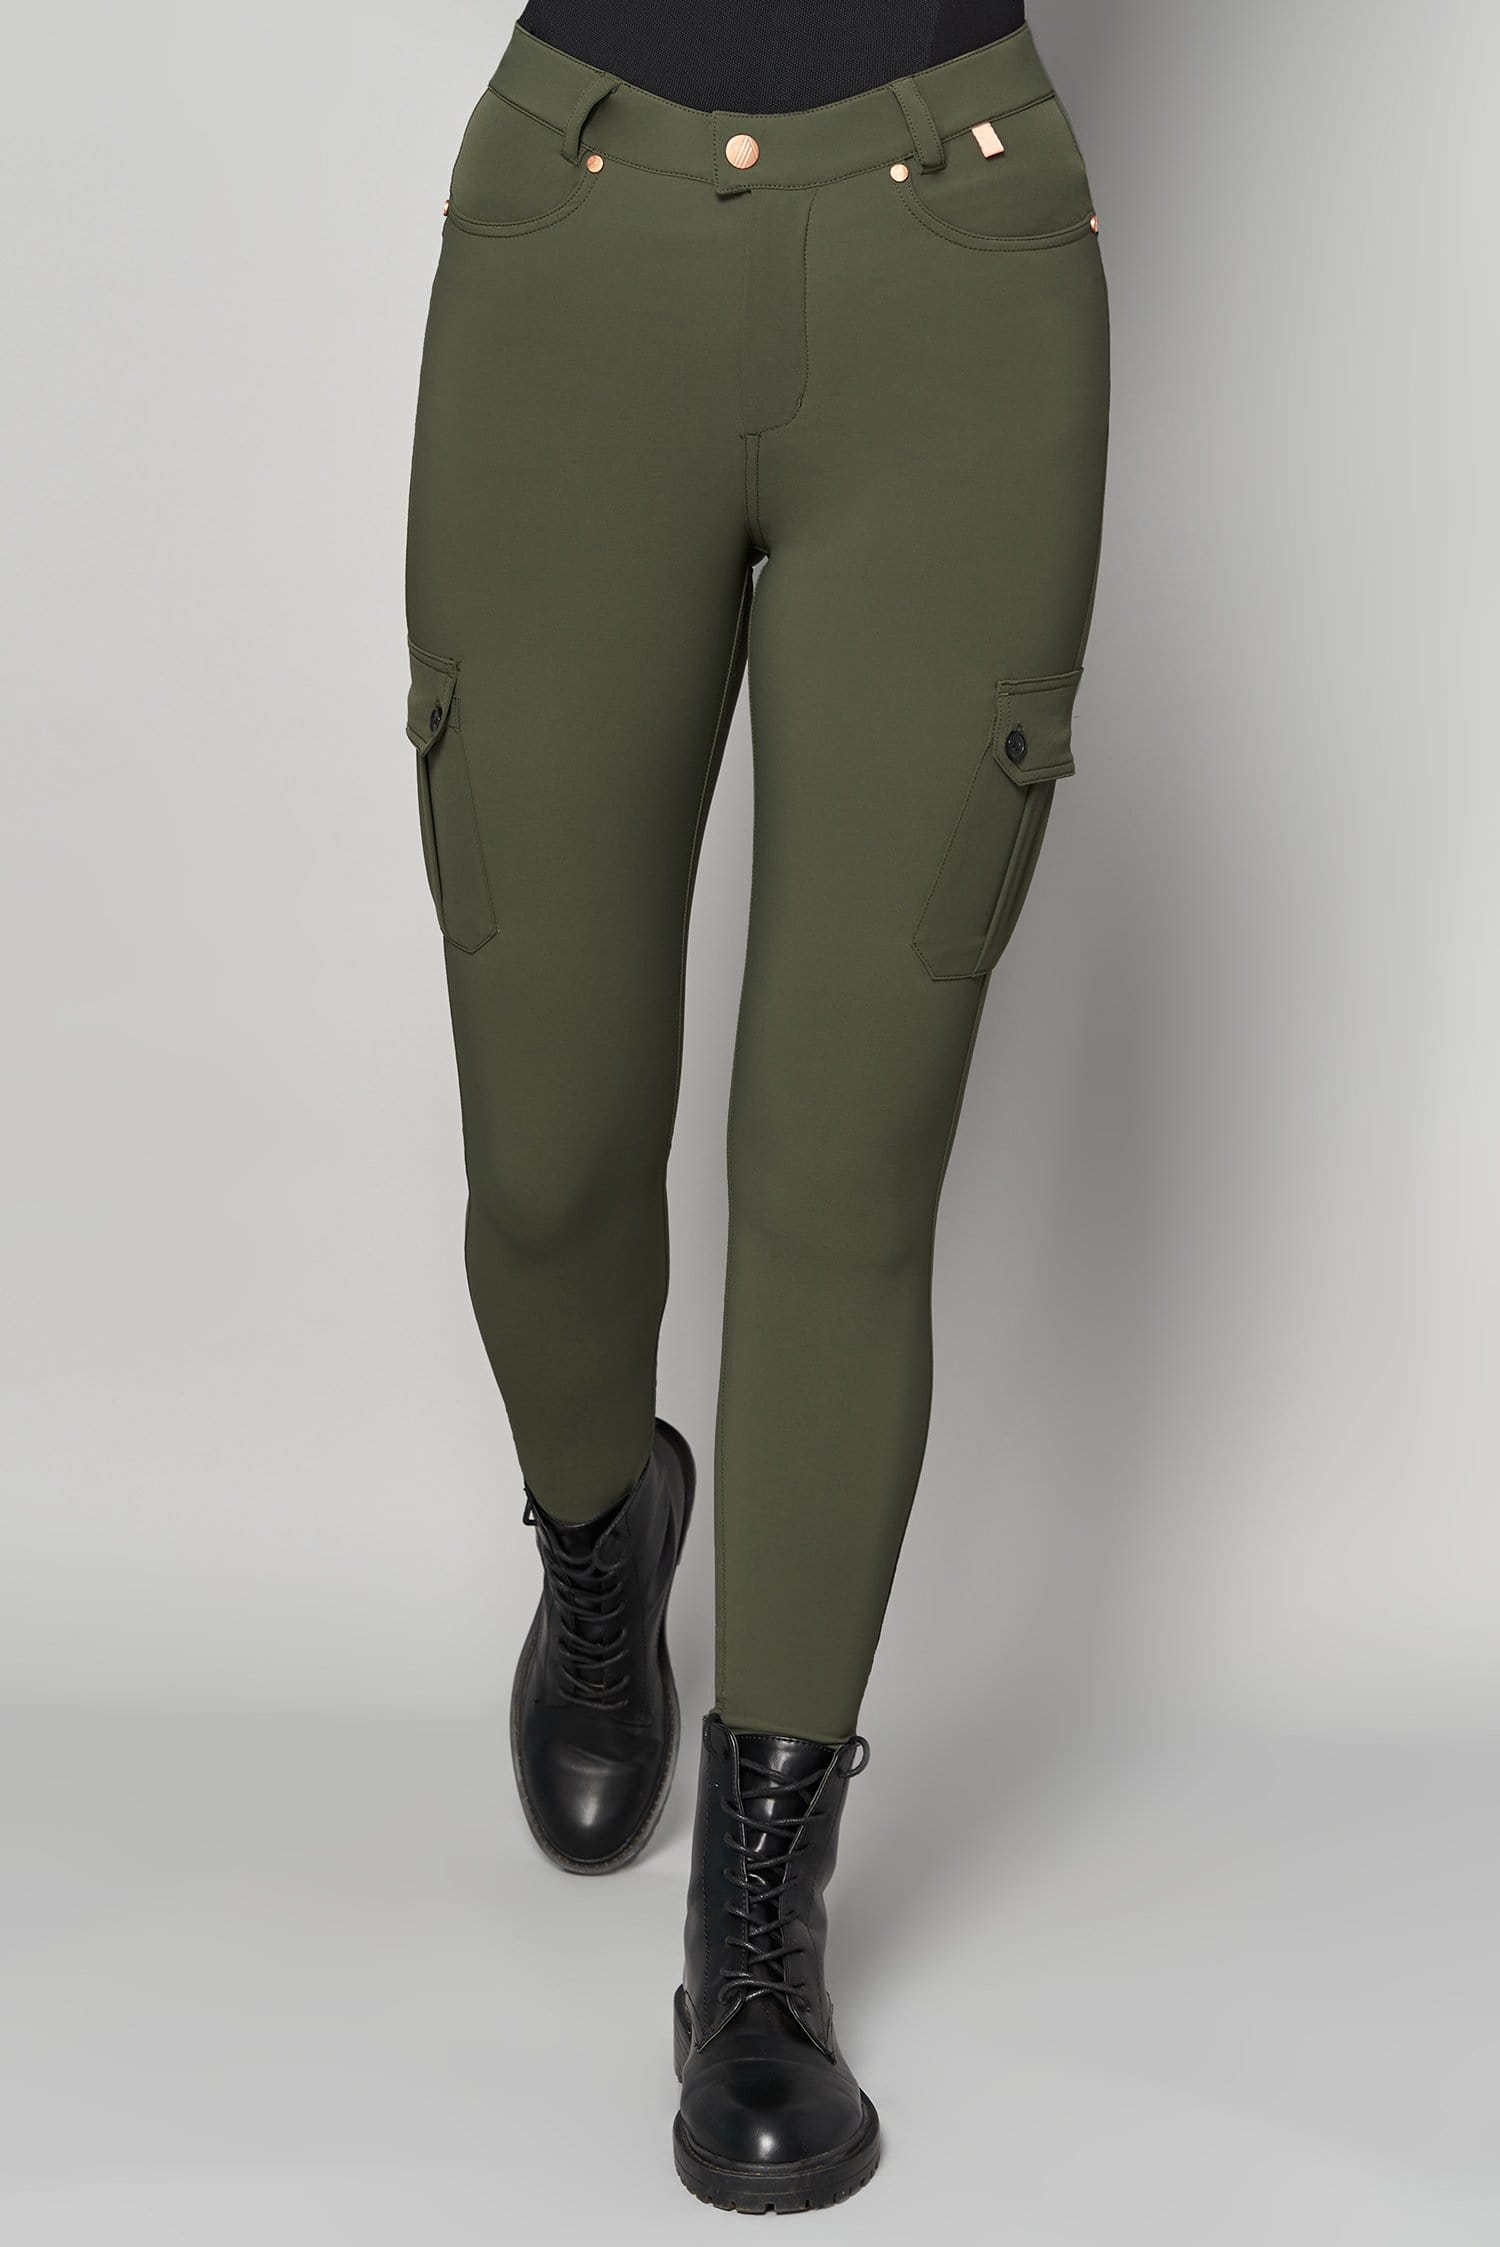 Cargo Max Stretch Outdoor Trousers - Khaki - 30p / Uk12 - Womens - Acai Outdoorwear